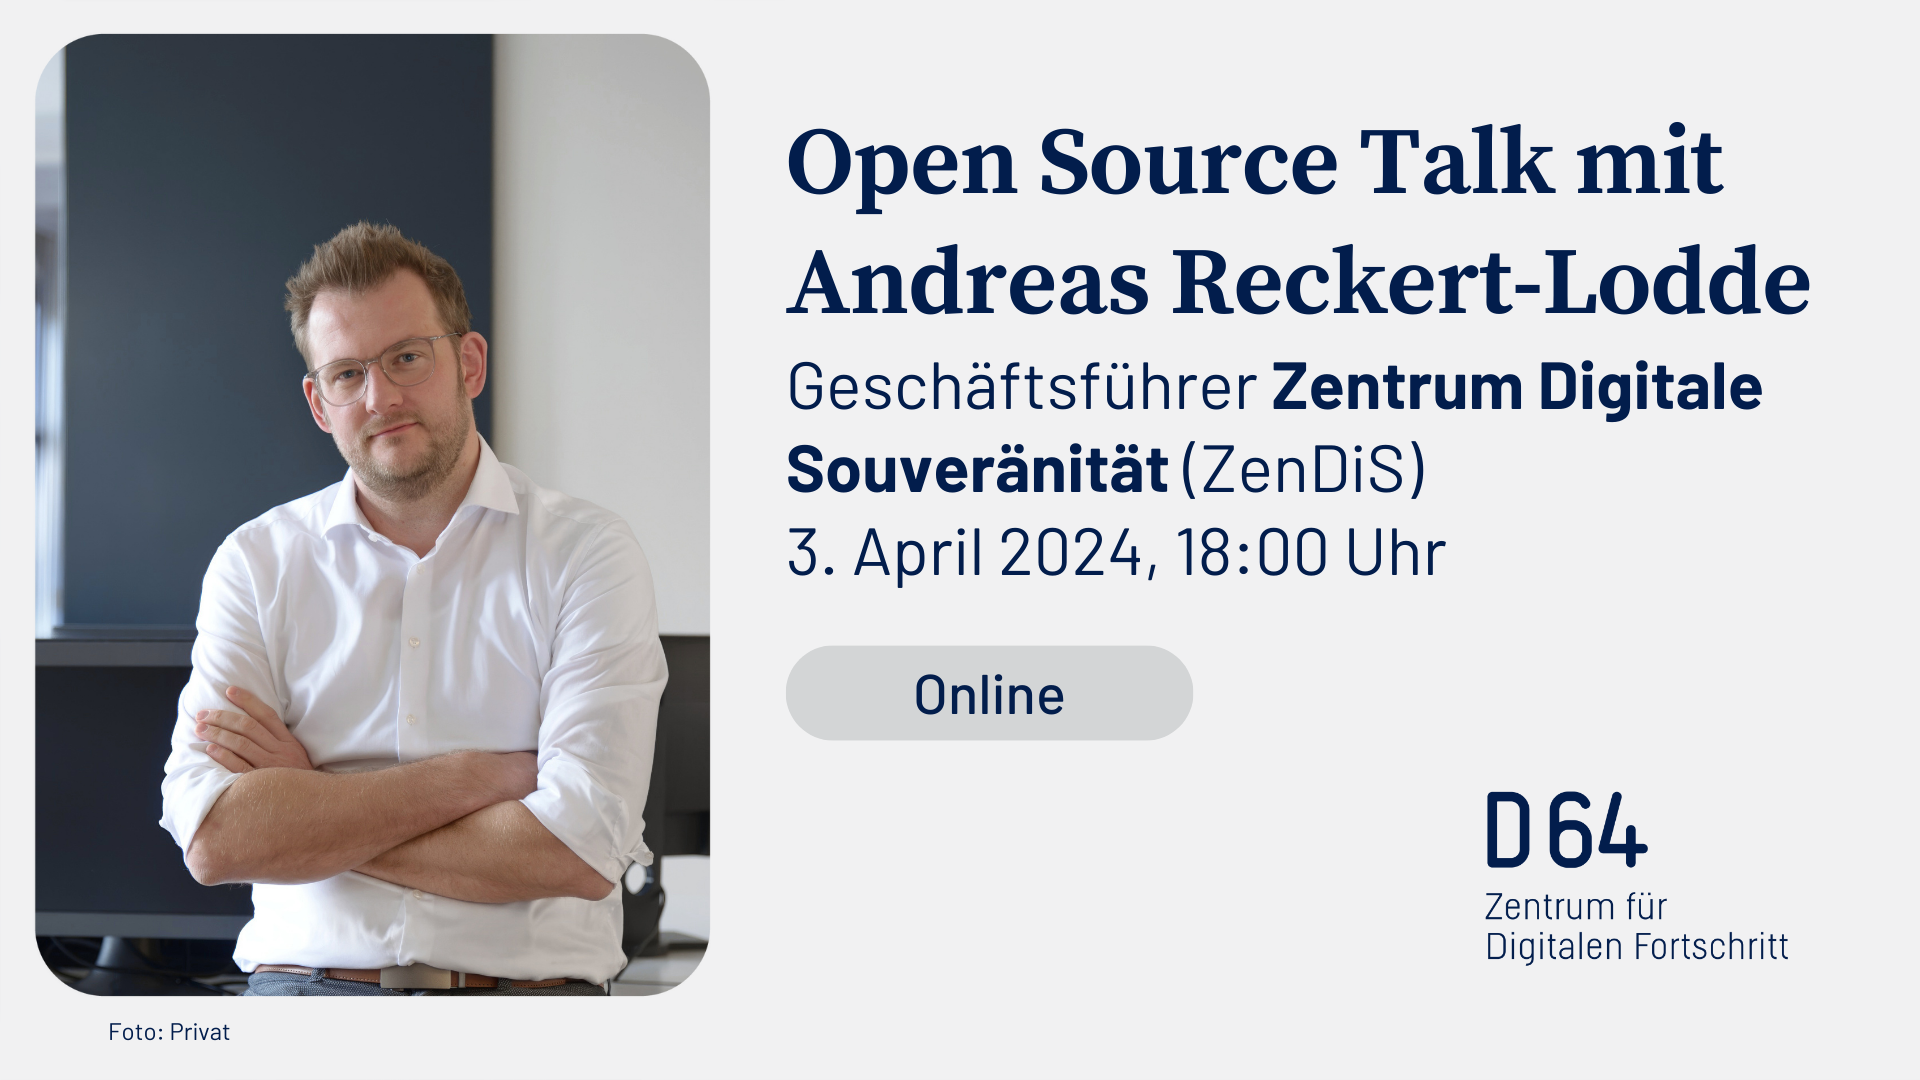 Open Source Talk mit Andreas Reckert-Lodde